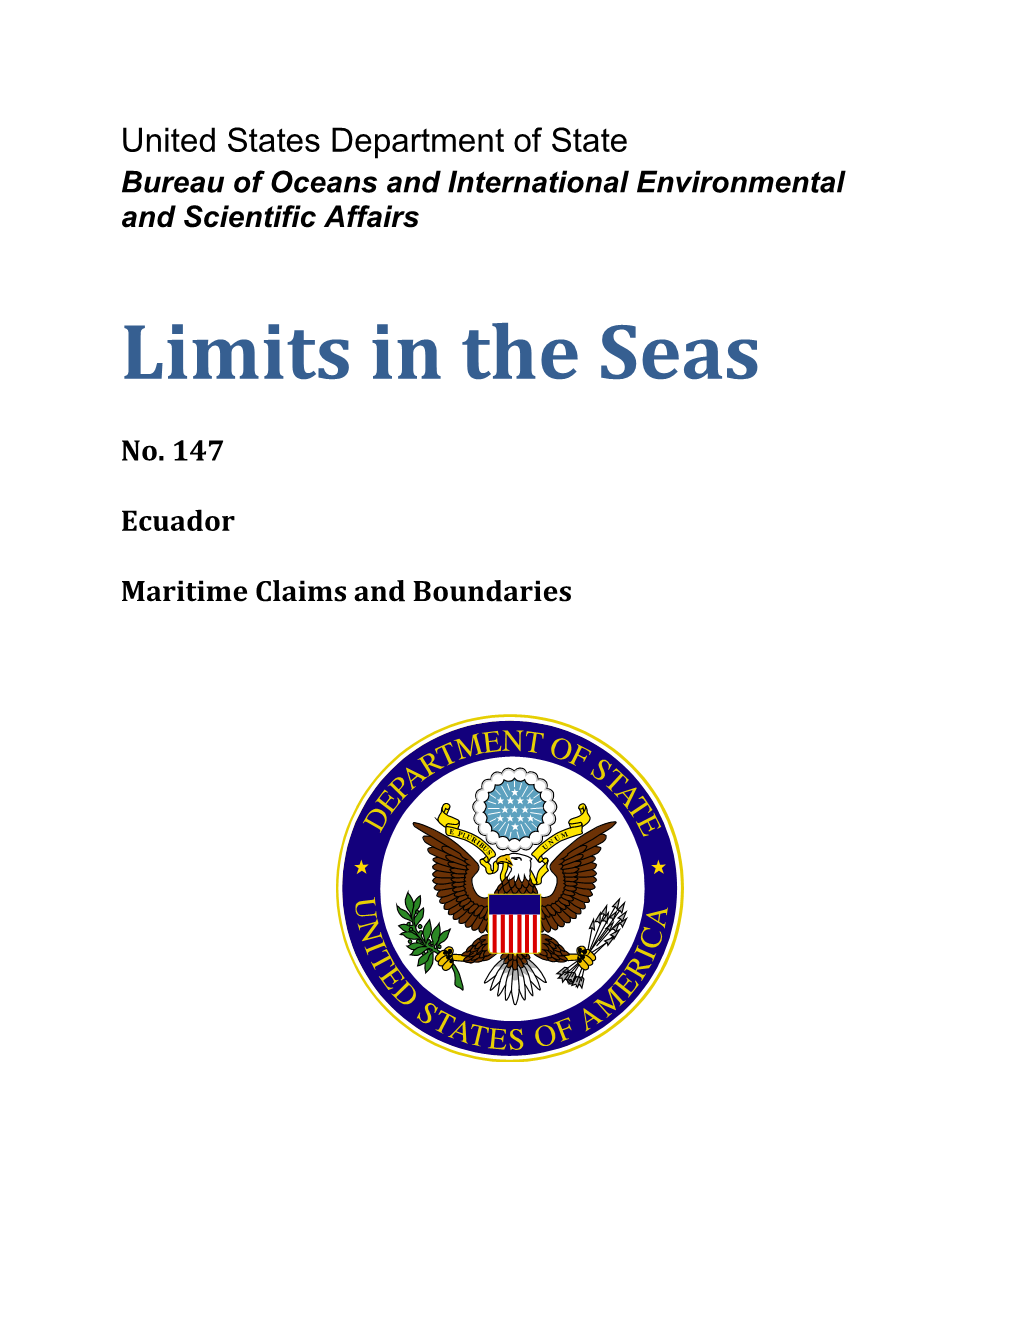 Limits in the Seas No. 147 Ecuador Maritime Claims and Boundaries